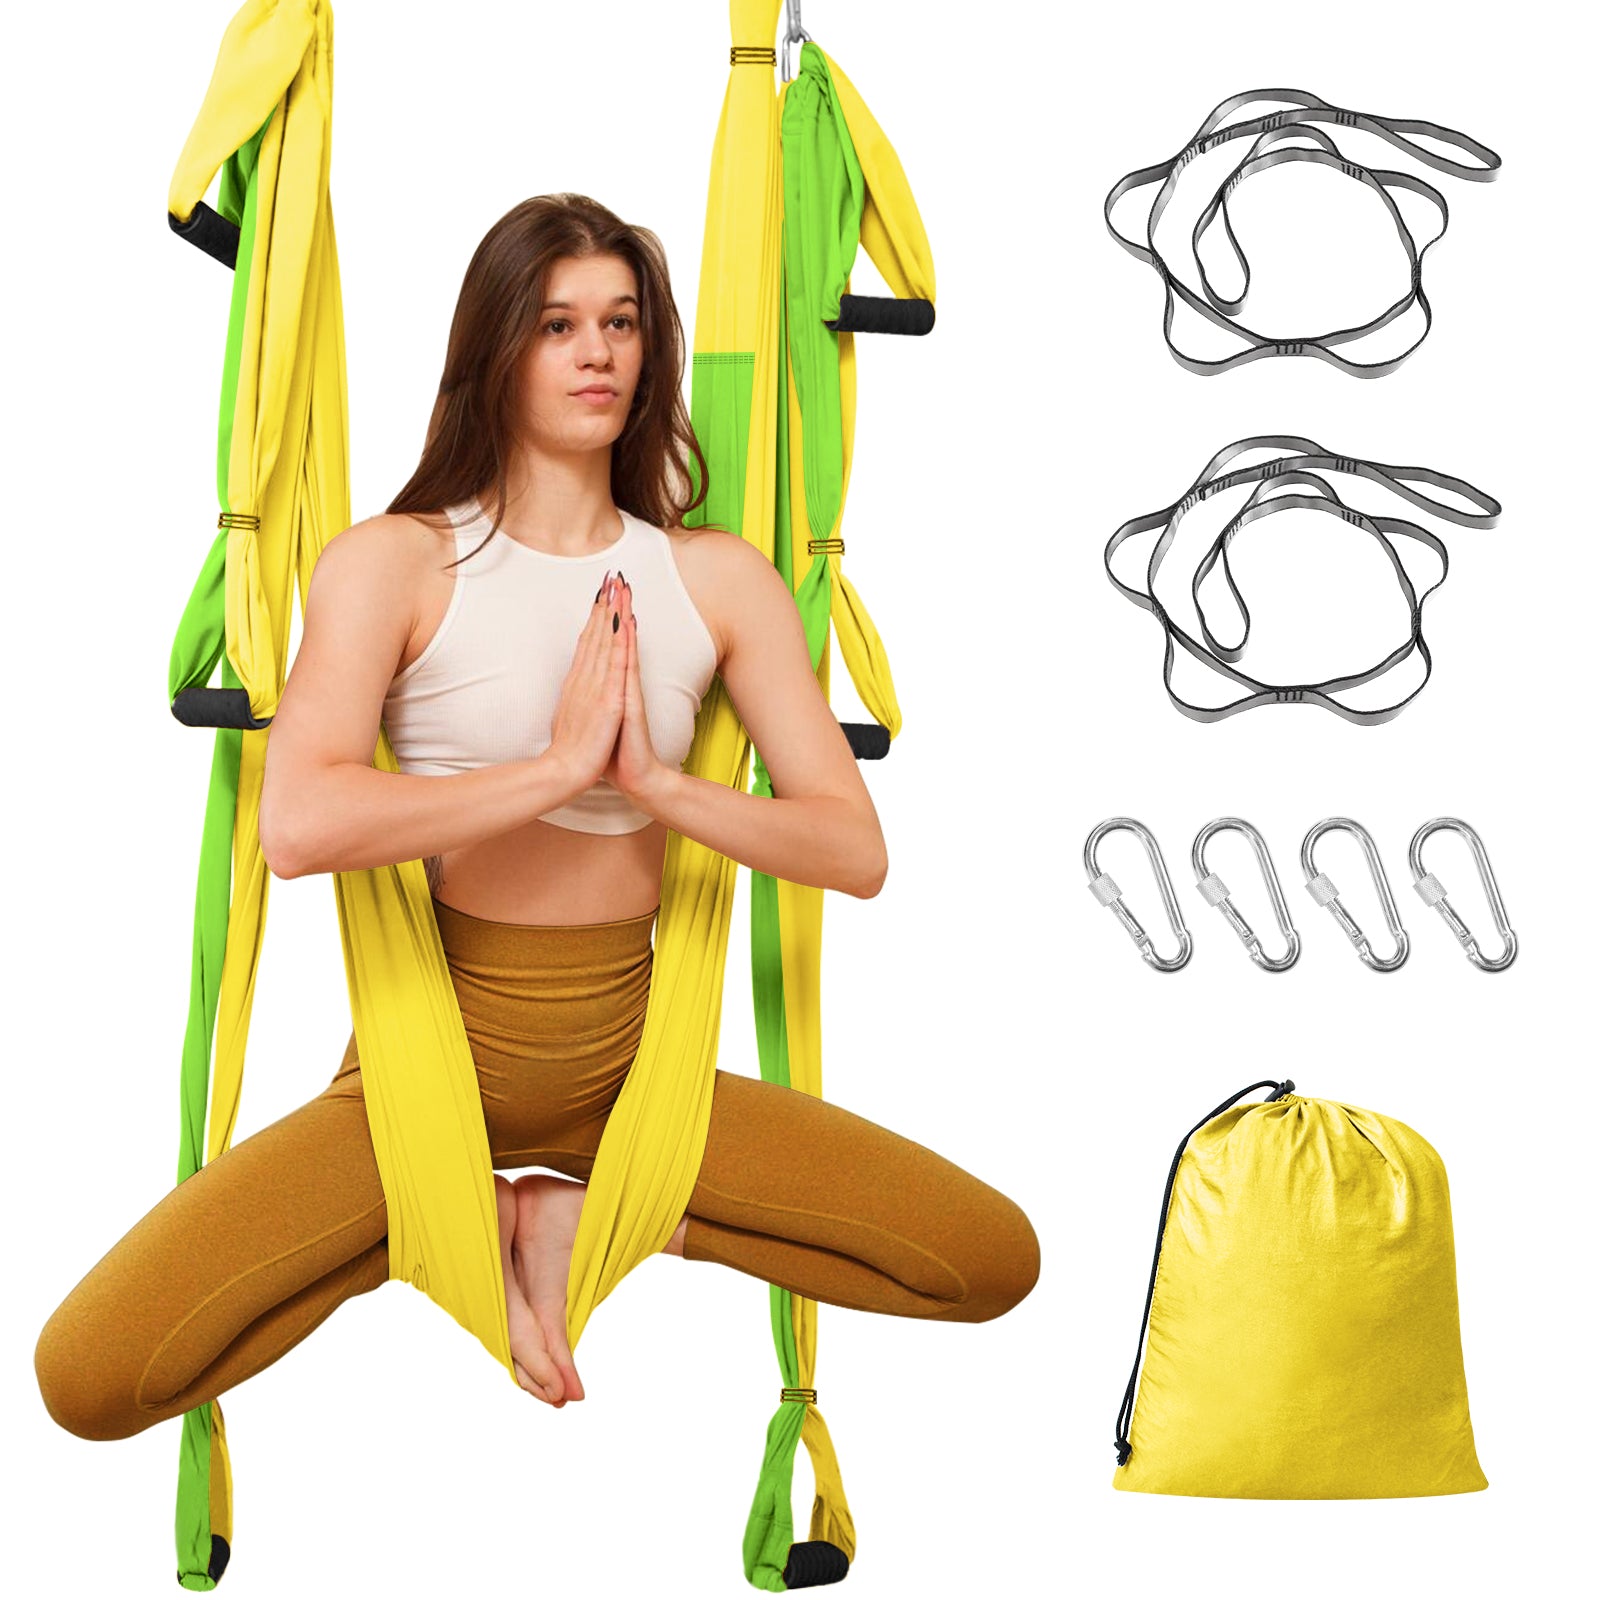 Anti-Gravity-Yoga-Hammock-Swing-with-Daisy-Chain-Extension-Aerial-Yoga-Hammock-Yoga-Swing-Set-Green-Yellow-1-2-Meter-Daisy-Chain-Size-250-x-150-cm-98-x-59-Inch-Anti-Gravity-Yoga-Hammock-Swing-green-yellow